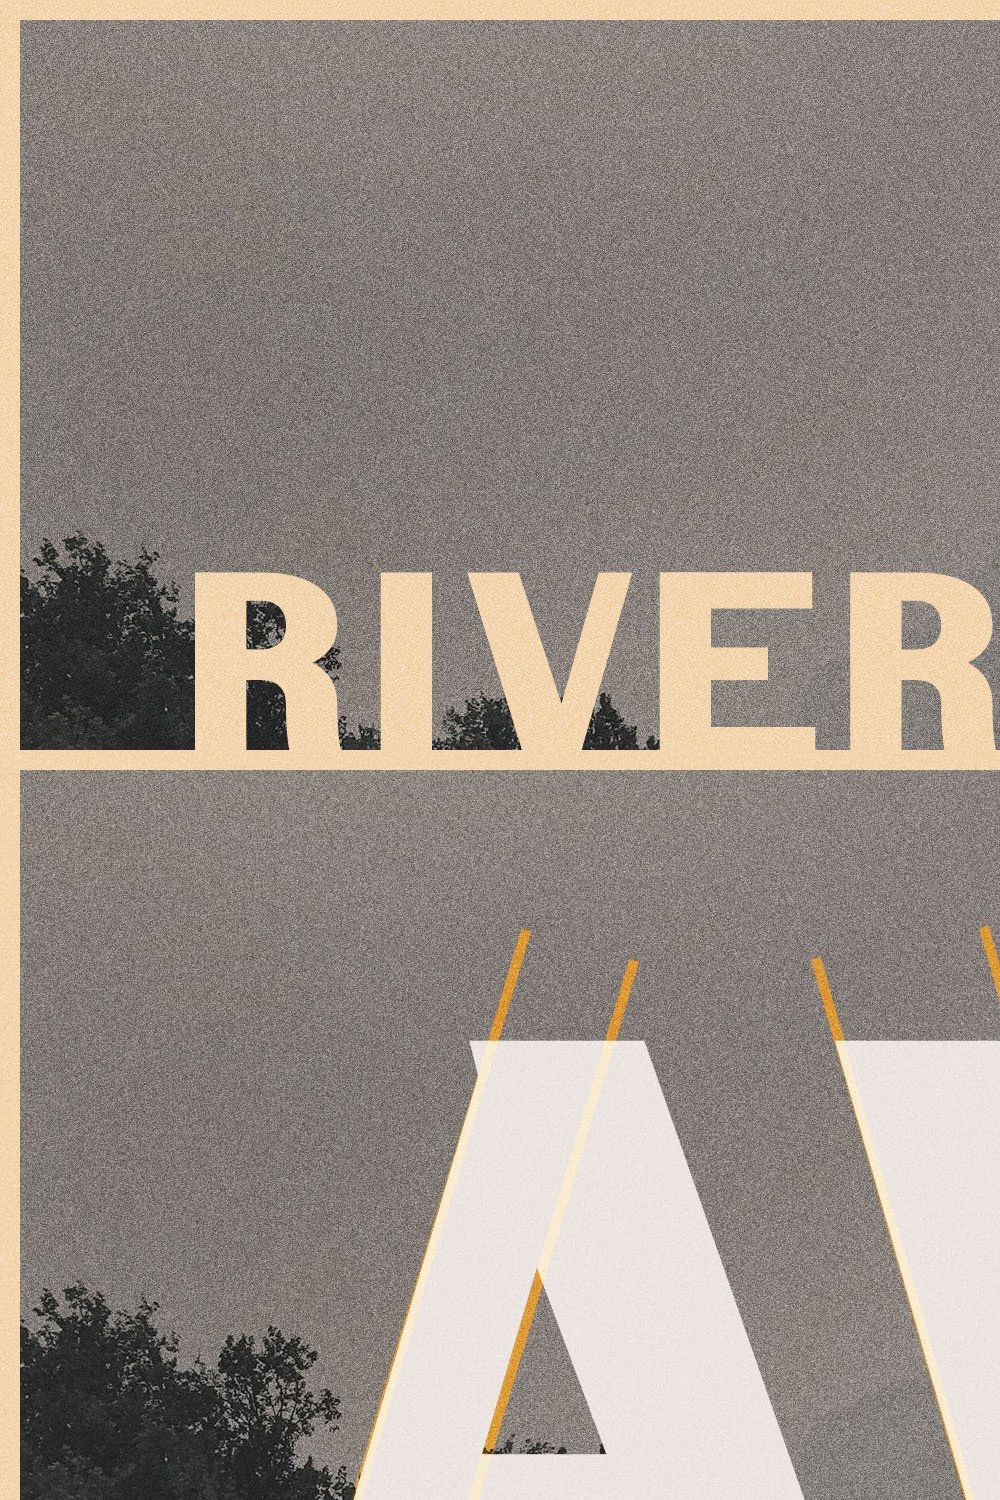 Riverwest Vintage Industrial Font pinterest preview image.